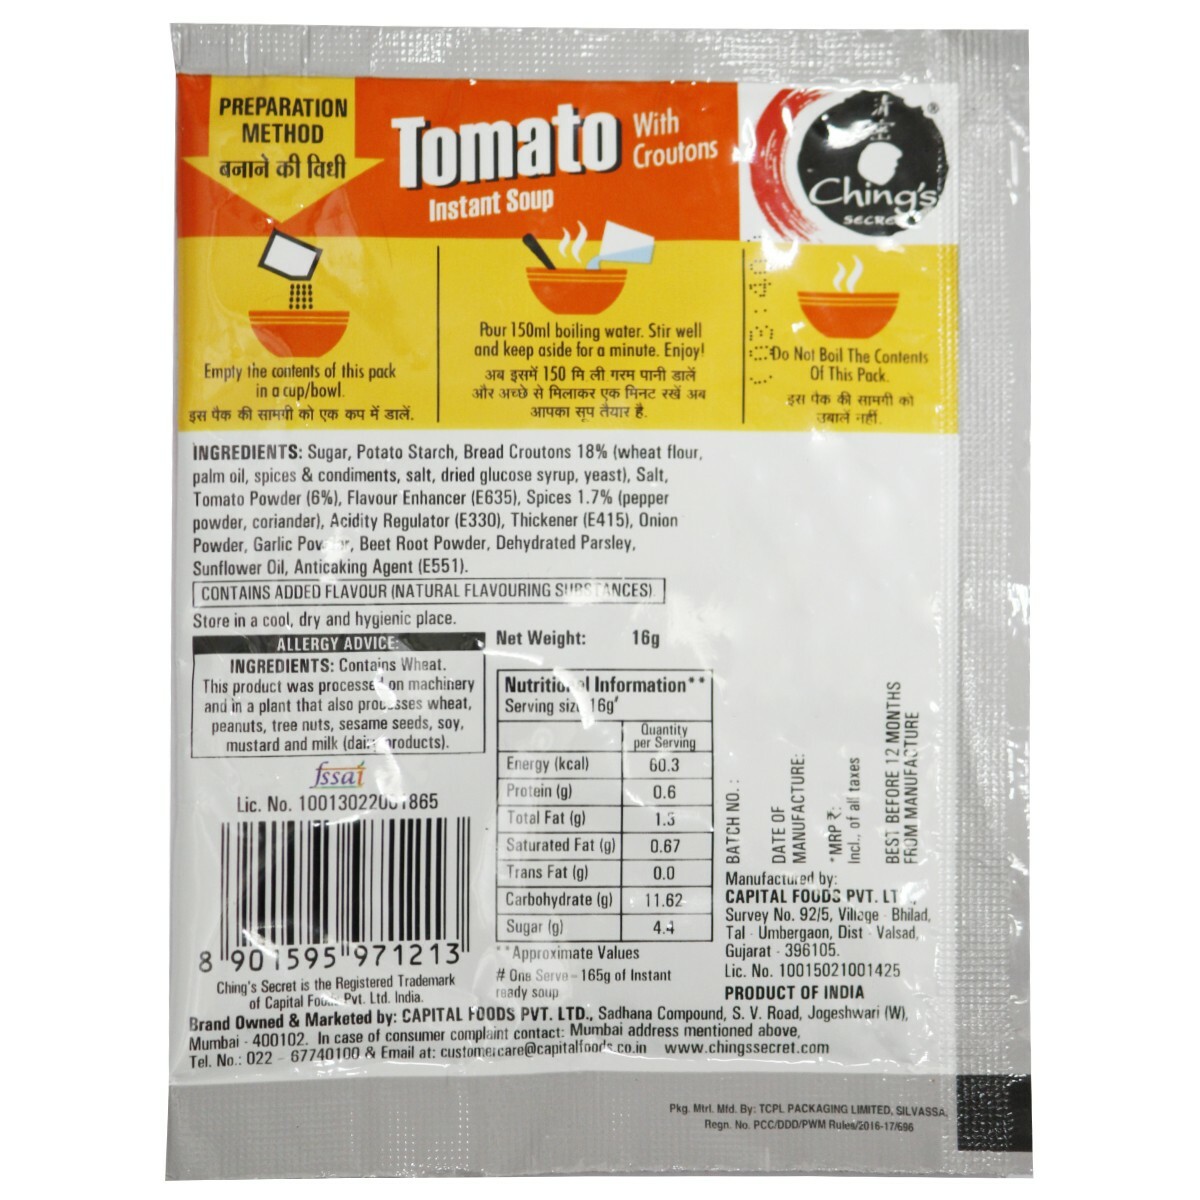 CHING'S SECRET Instant Tomato Soup Carton 16g